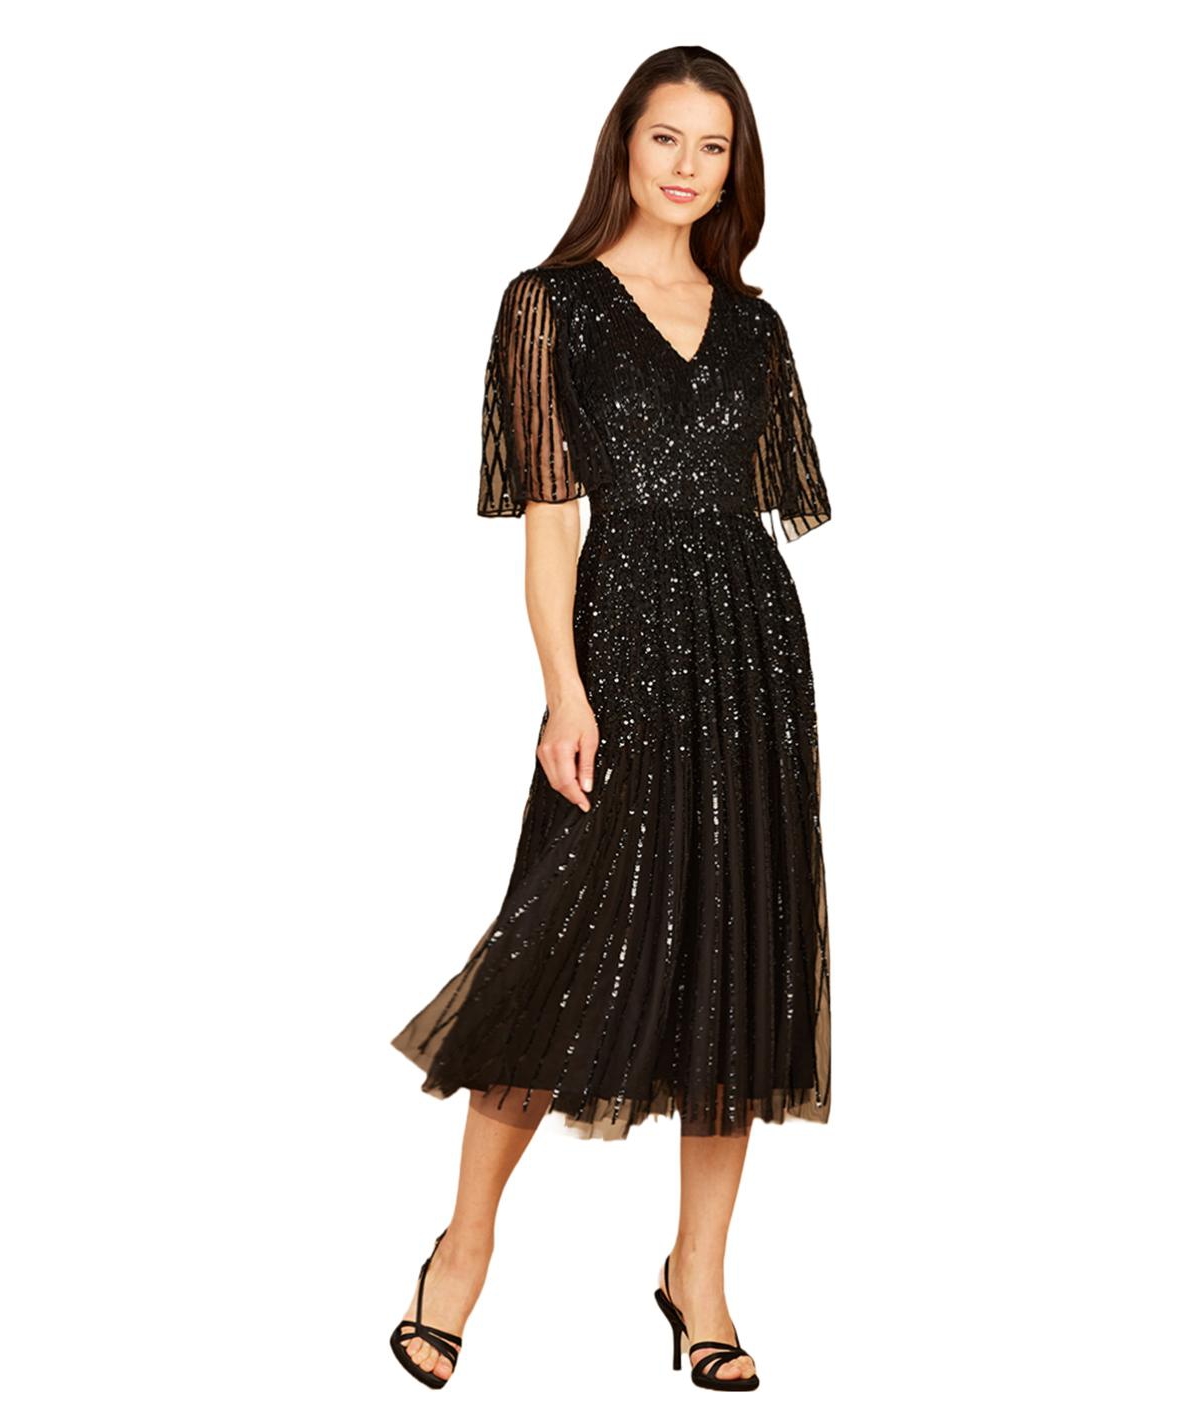 Buy Boardwalk Empire Inspired Dresses Womens Flowing Sequin Midi Dress with Short Sleeves - Black $458.00 AT vintagedancer.com